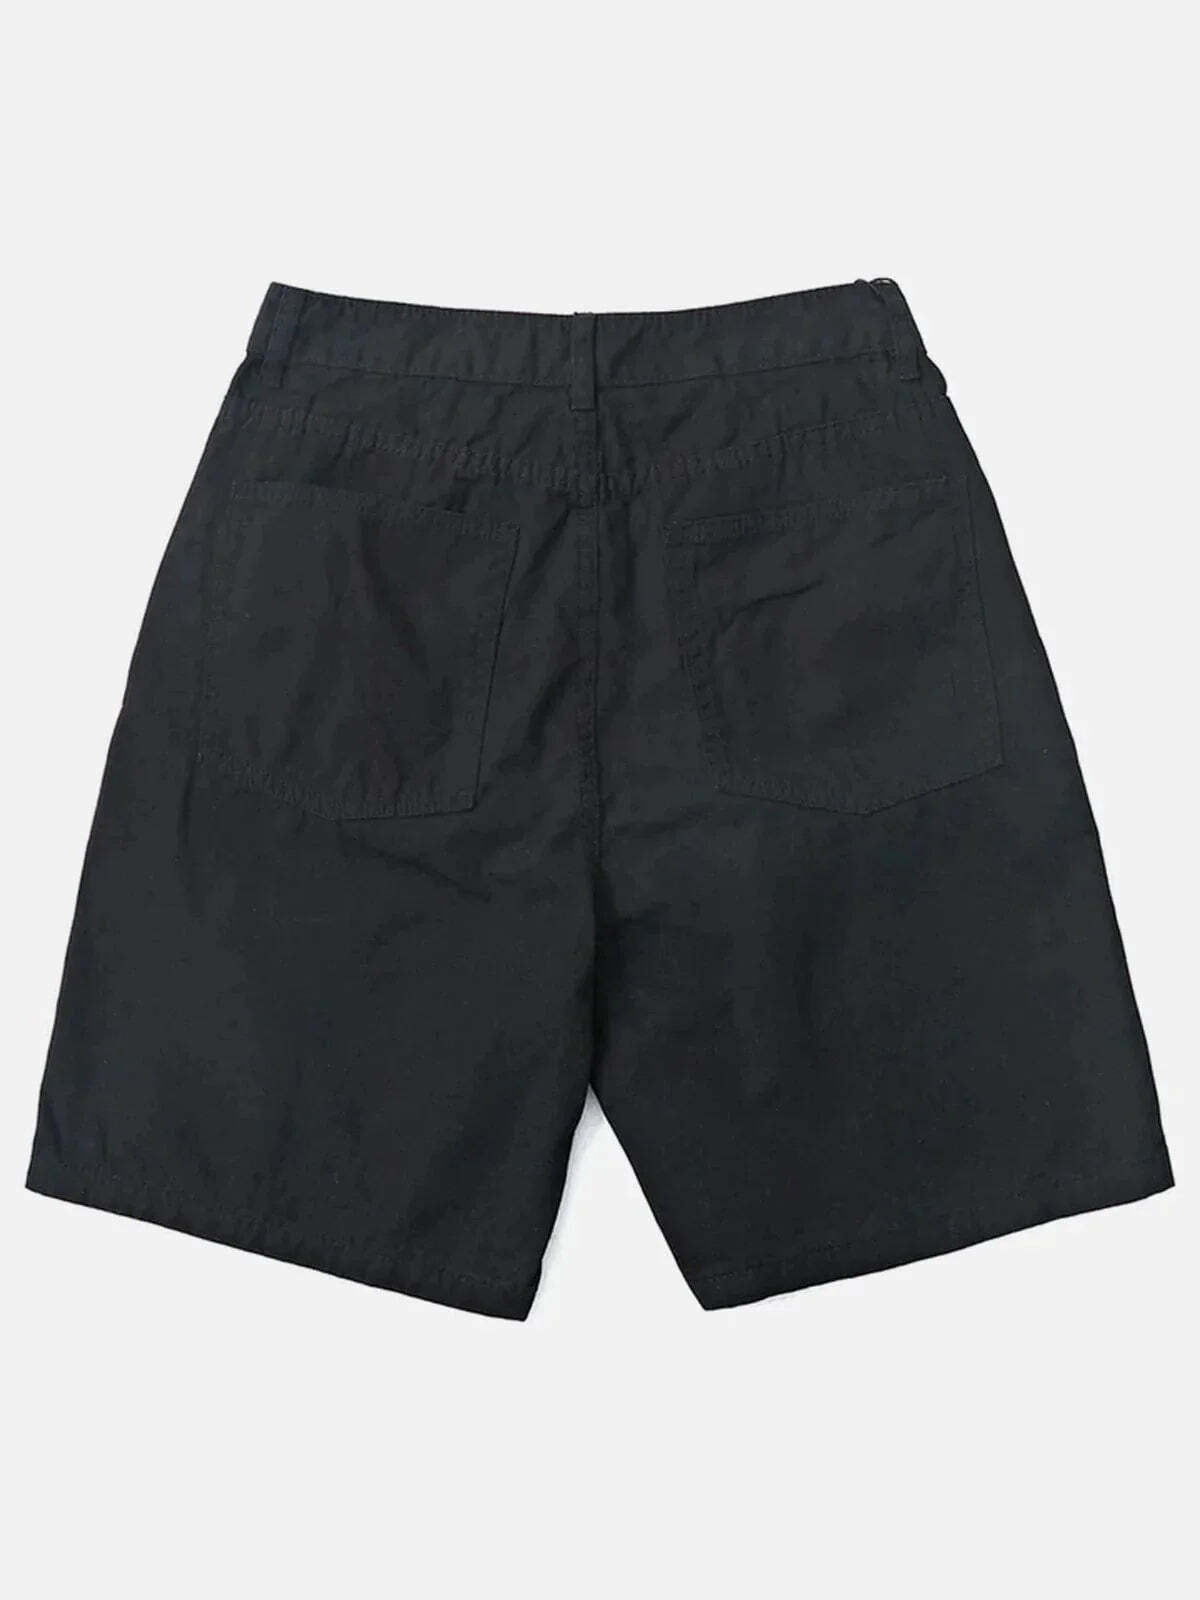 sleek pocket simple shorts urban streetwear essential 2363